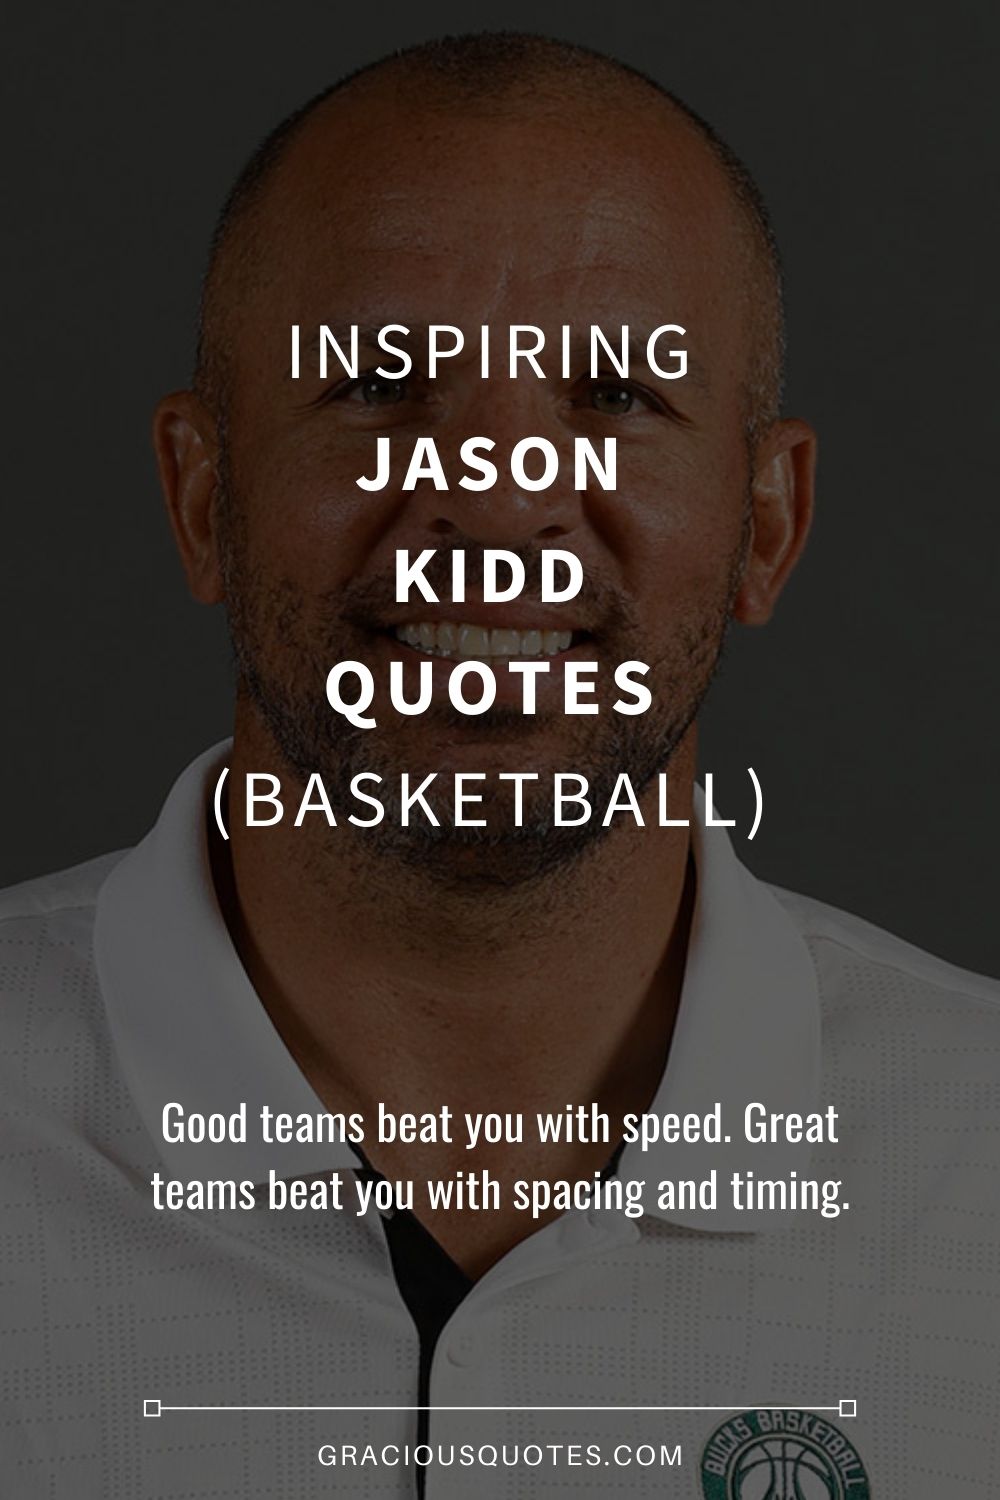 Inspiring Jason Kidd Quotes (BASKETBALL) - Gracious Quotes